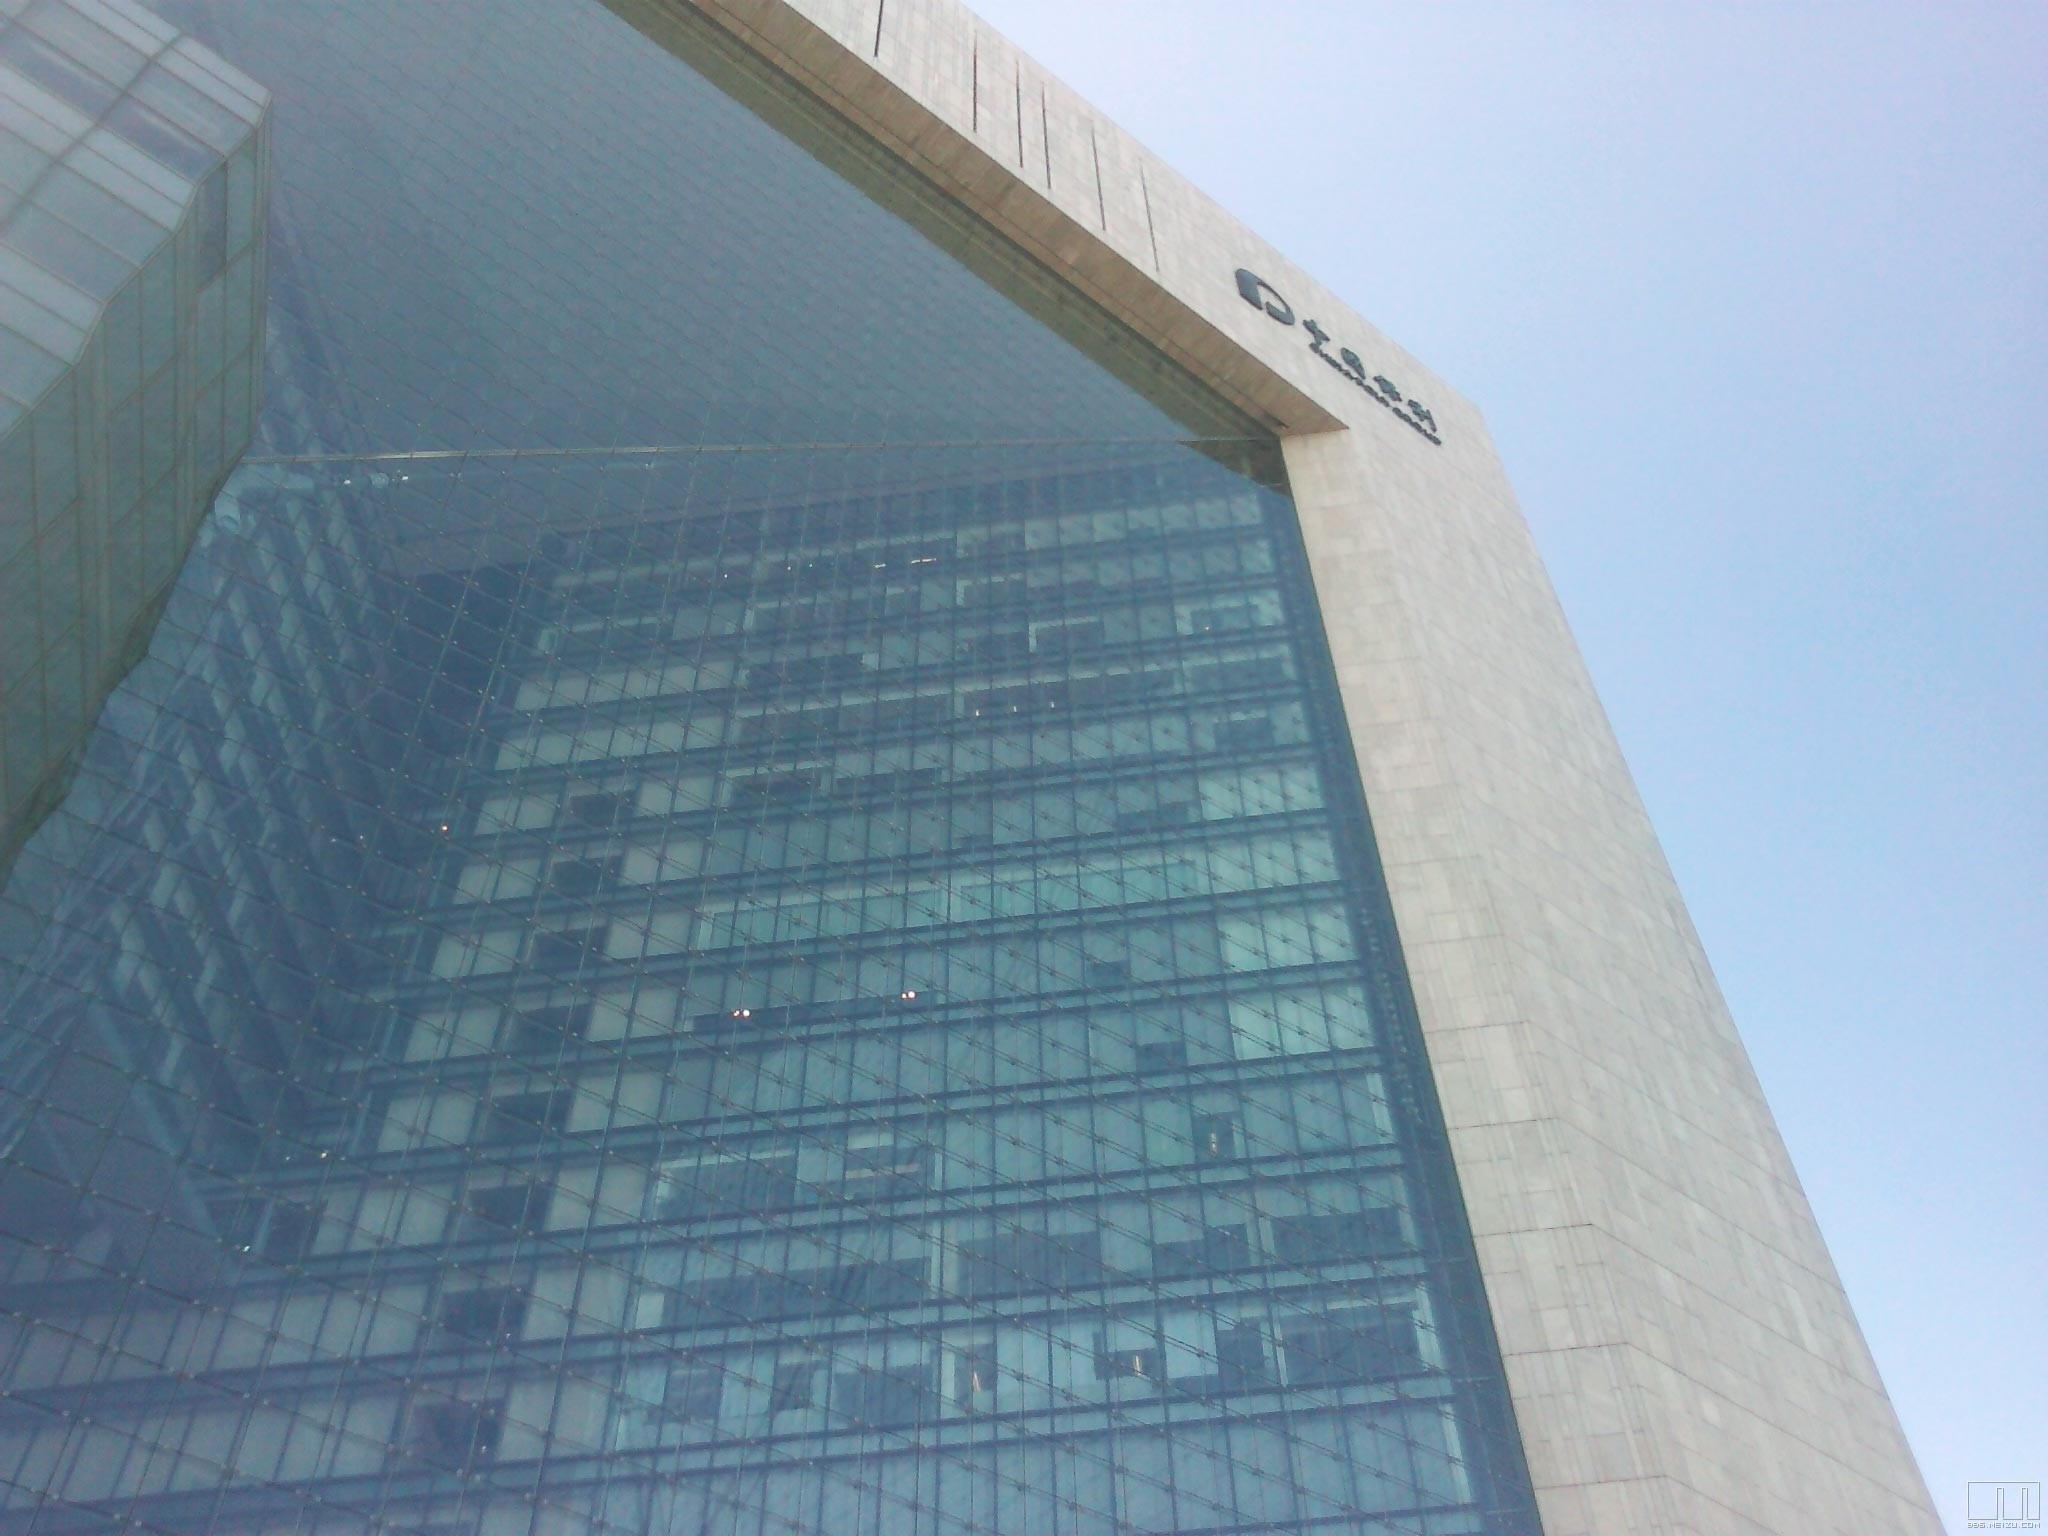 m8手机拍摄的一组建筑照片"中国新保利大厦""中央电视台新址"奉献给